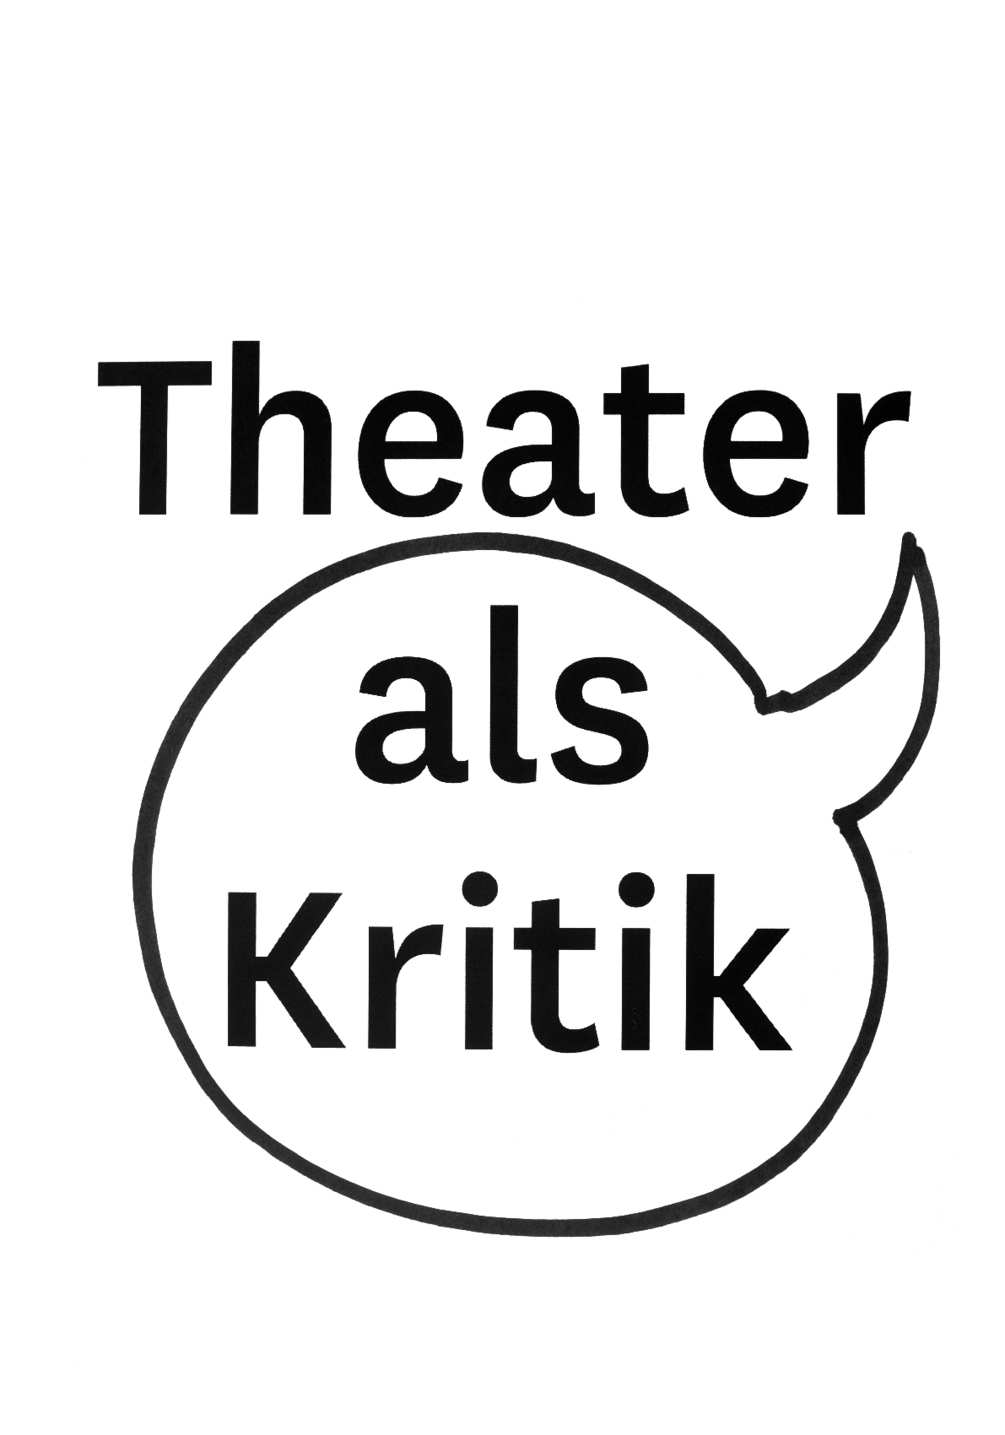 theater-as-critique-slip-08-1005x1435px